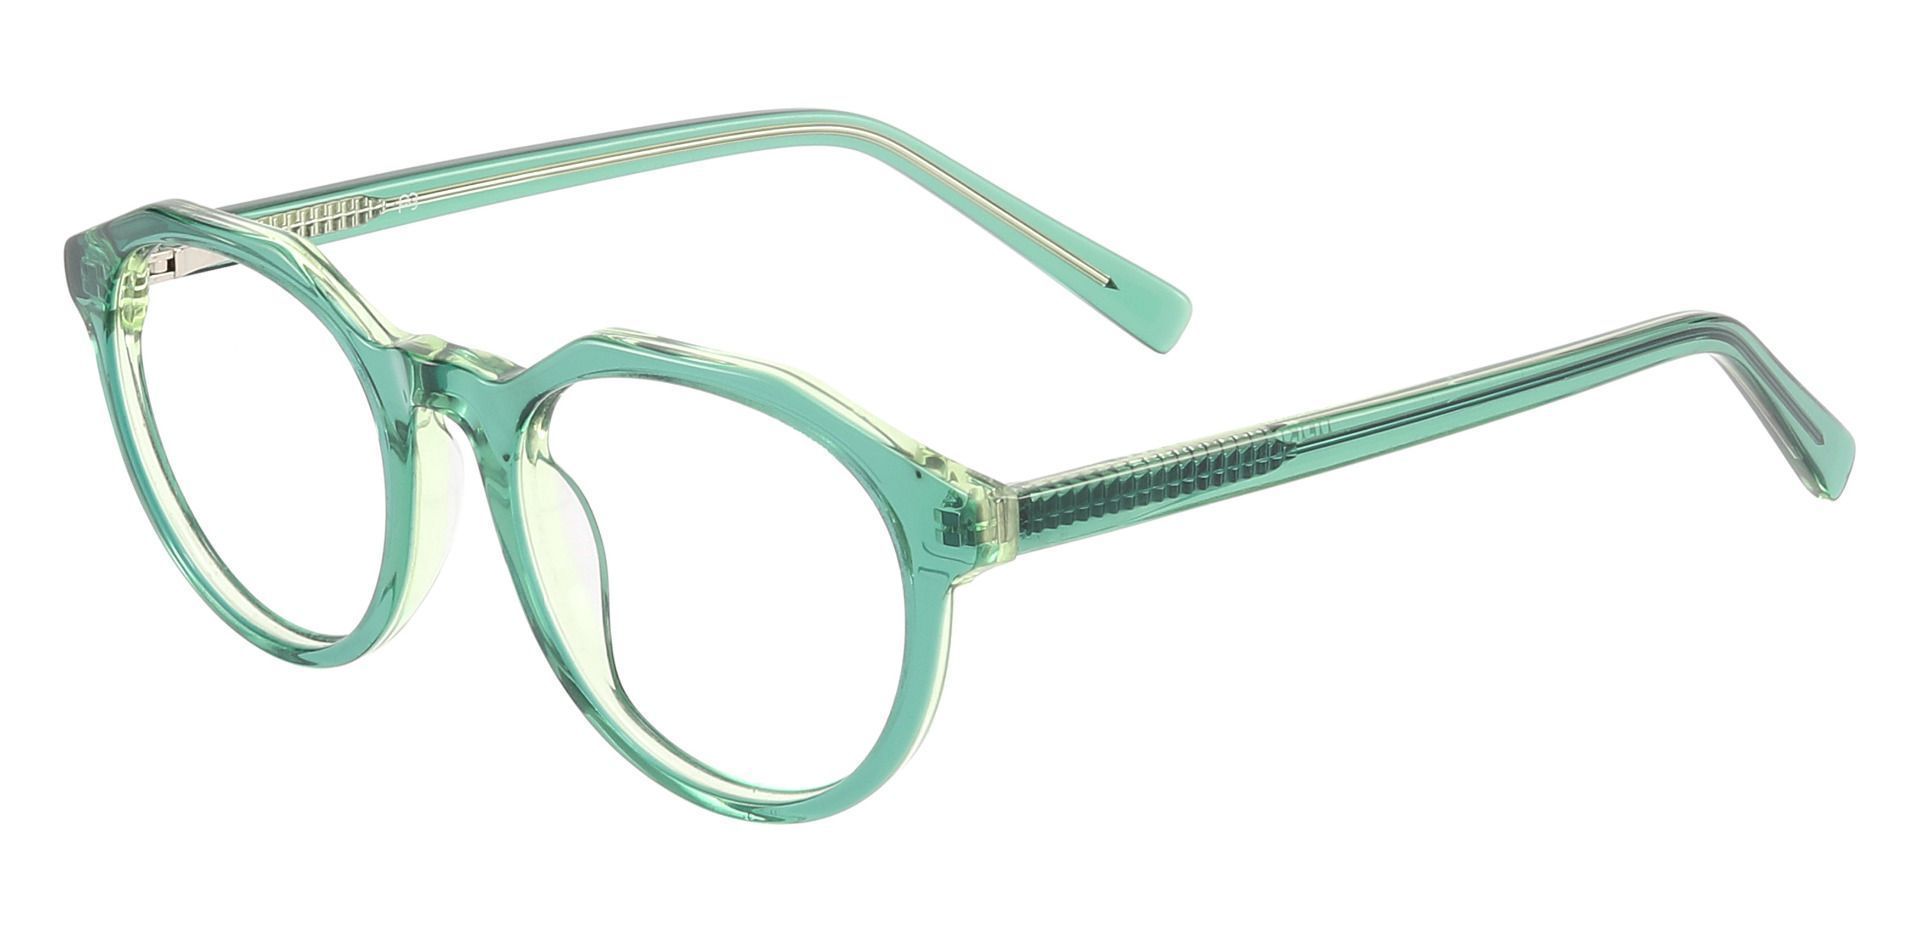 Mayfield Oval Progressive Glasses - Green